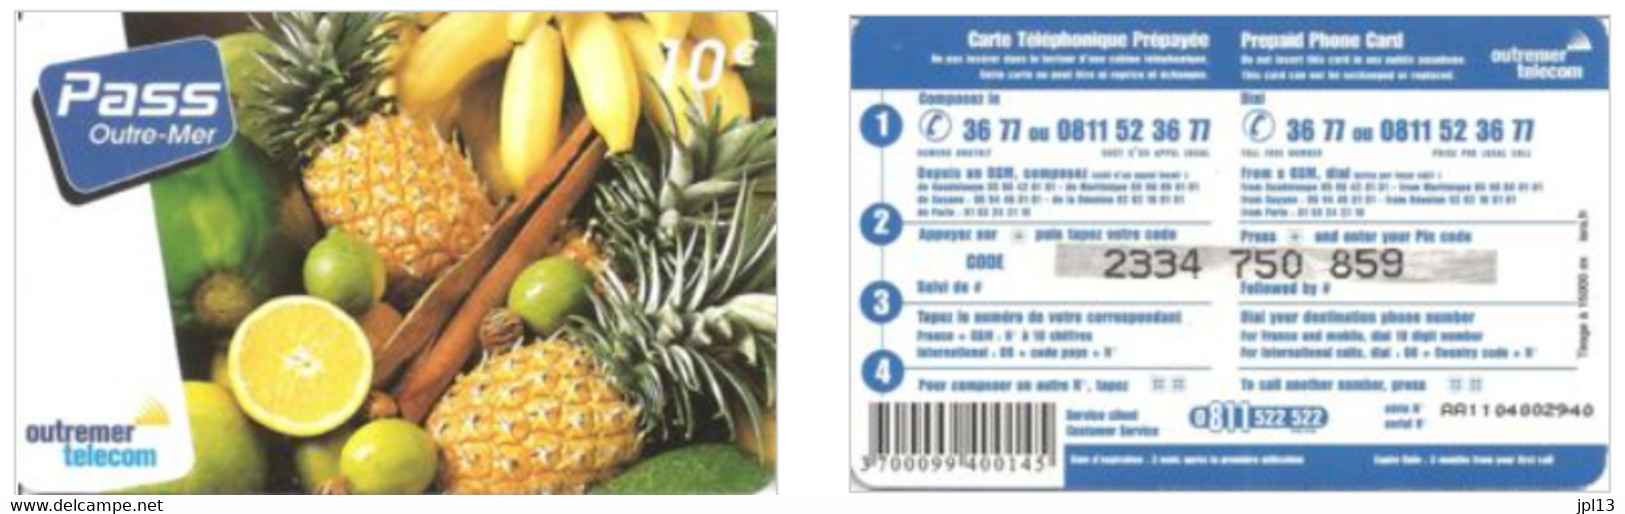 Carte Prépayée Outremer Telecom 10€ Caribbean Fruits (Pass Outre-Mer Logo), Tirage 31.500 Ex. - Antillen (Frans)